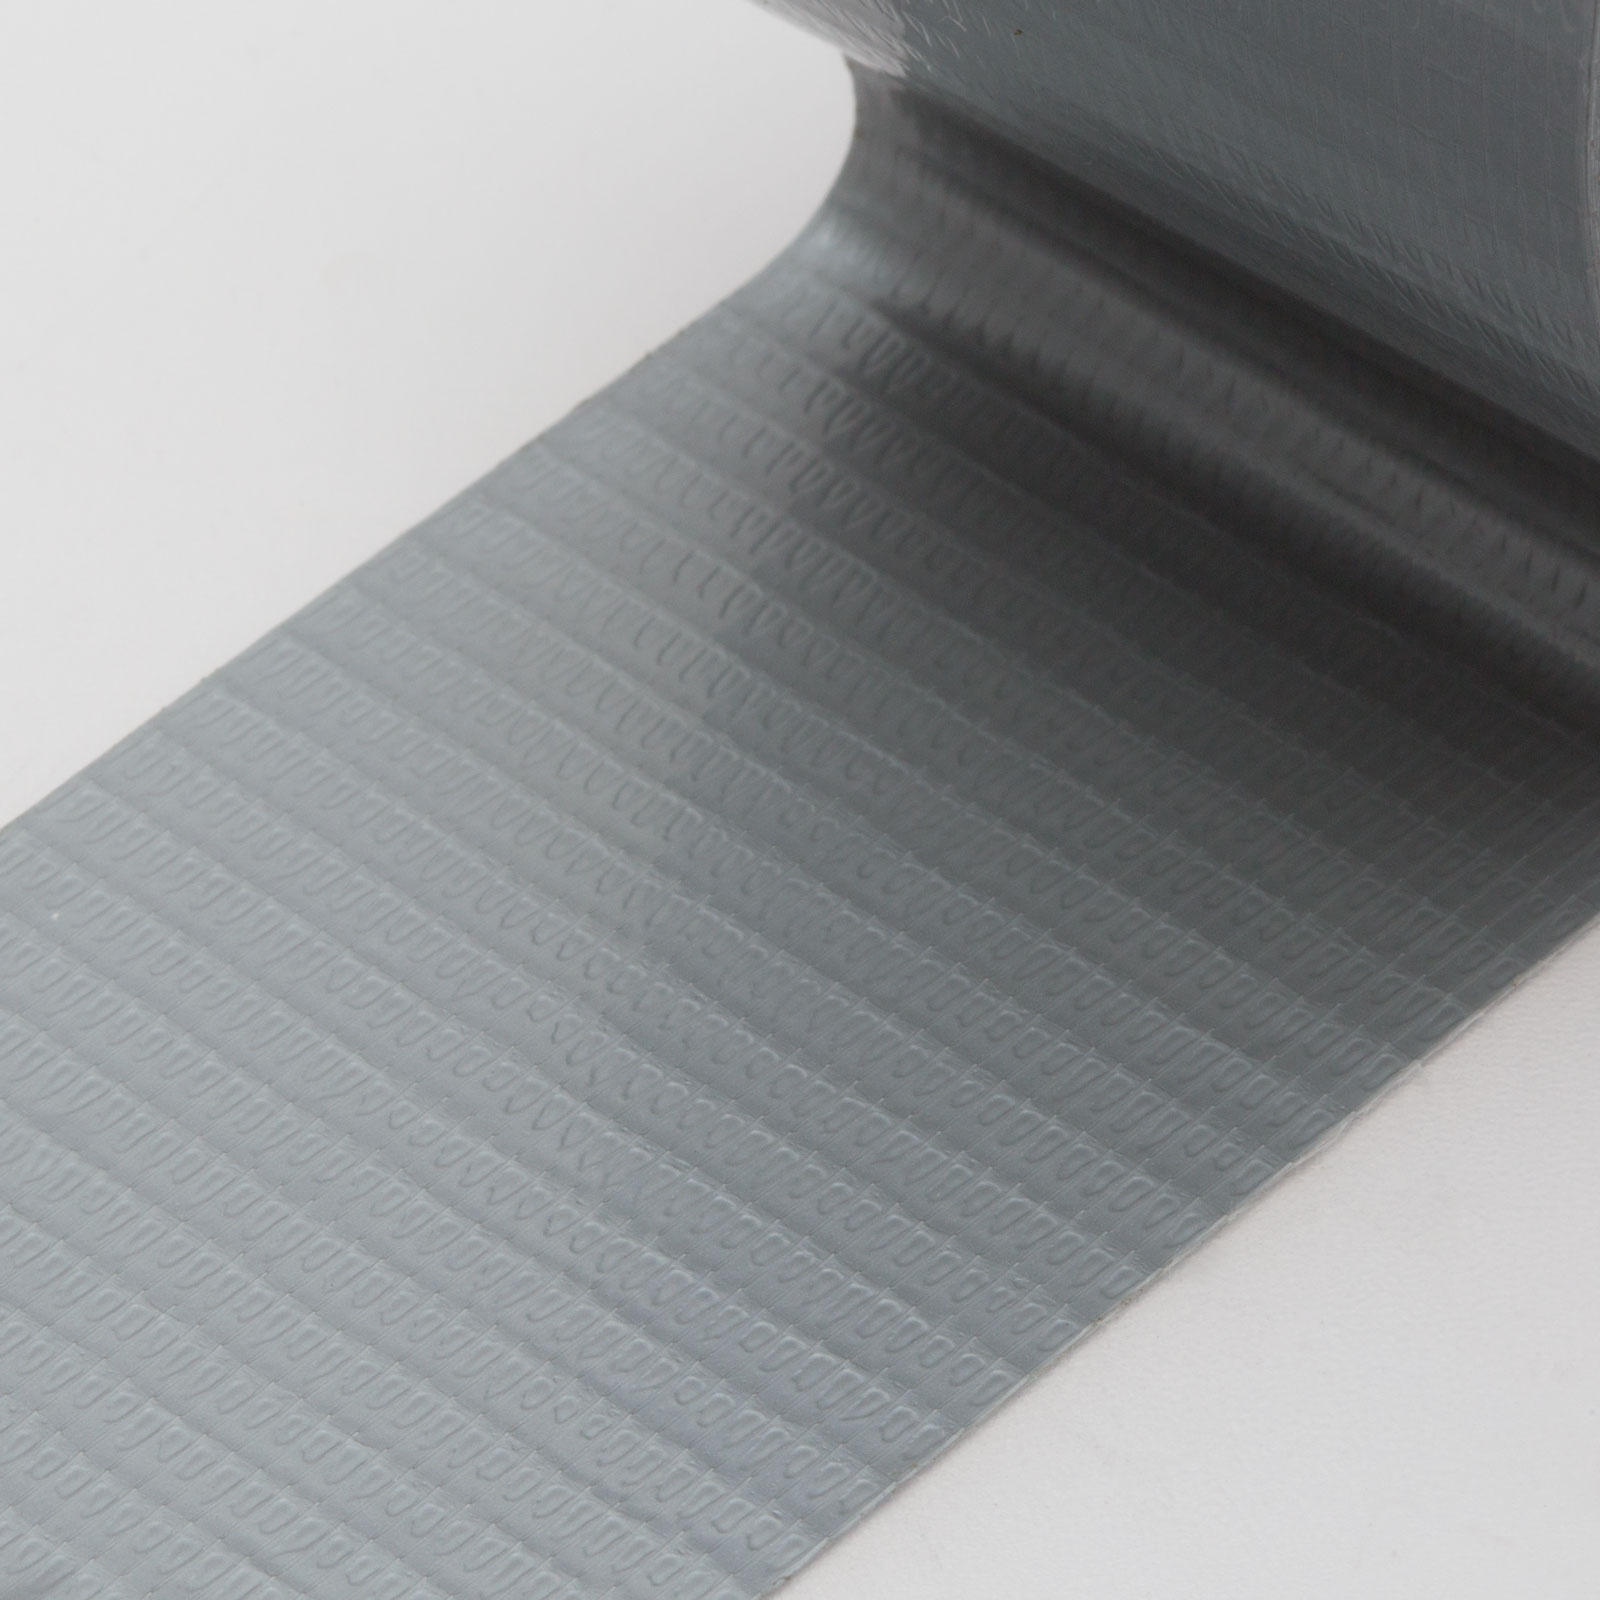 PVC Adhesive tape - grey - 10 m x 48 mm thumb